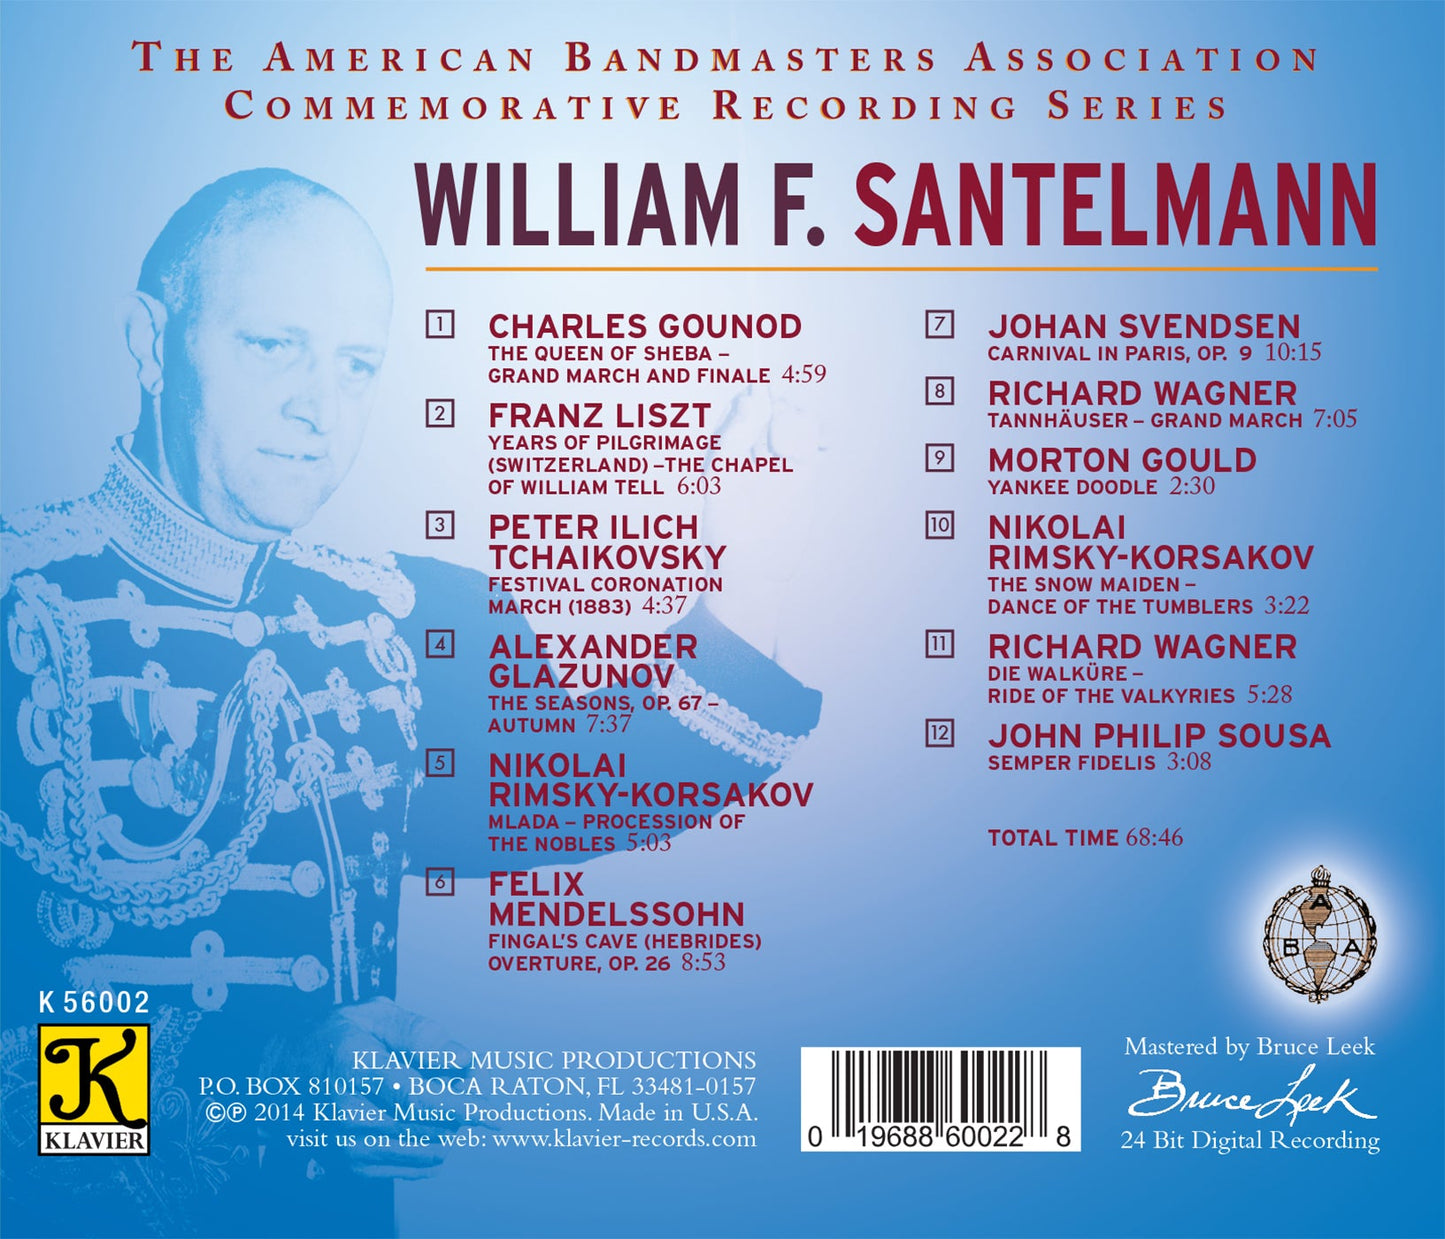 The American Bandmasters Association Commemorative Recording